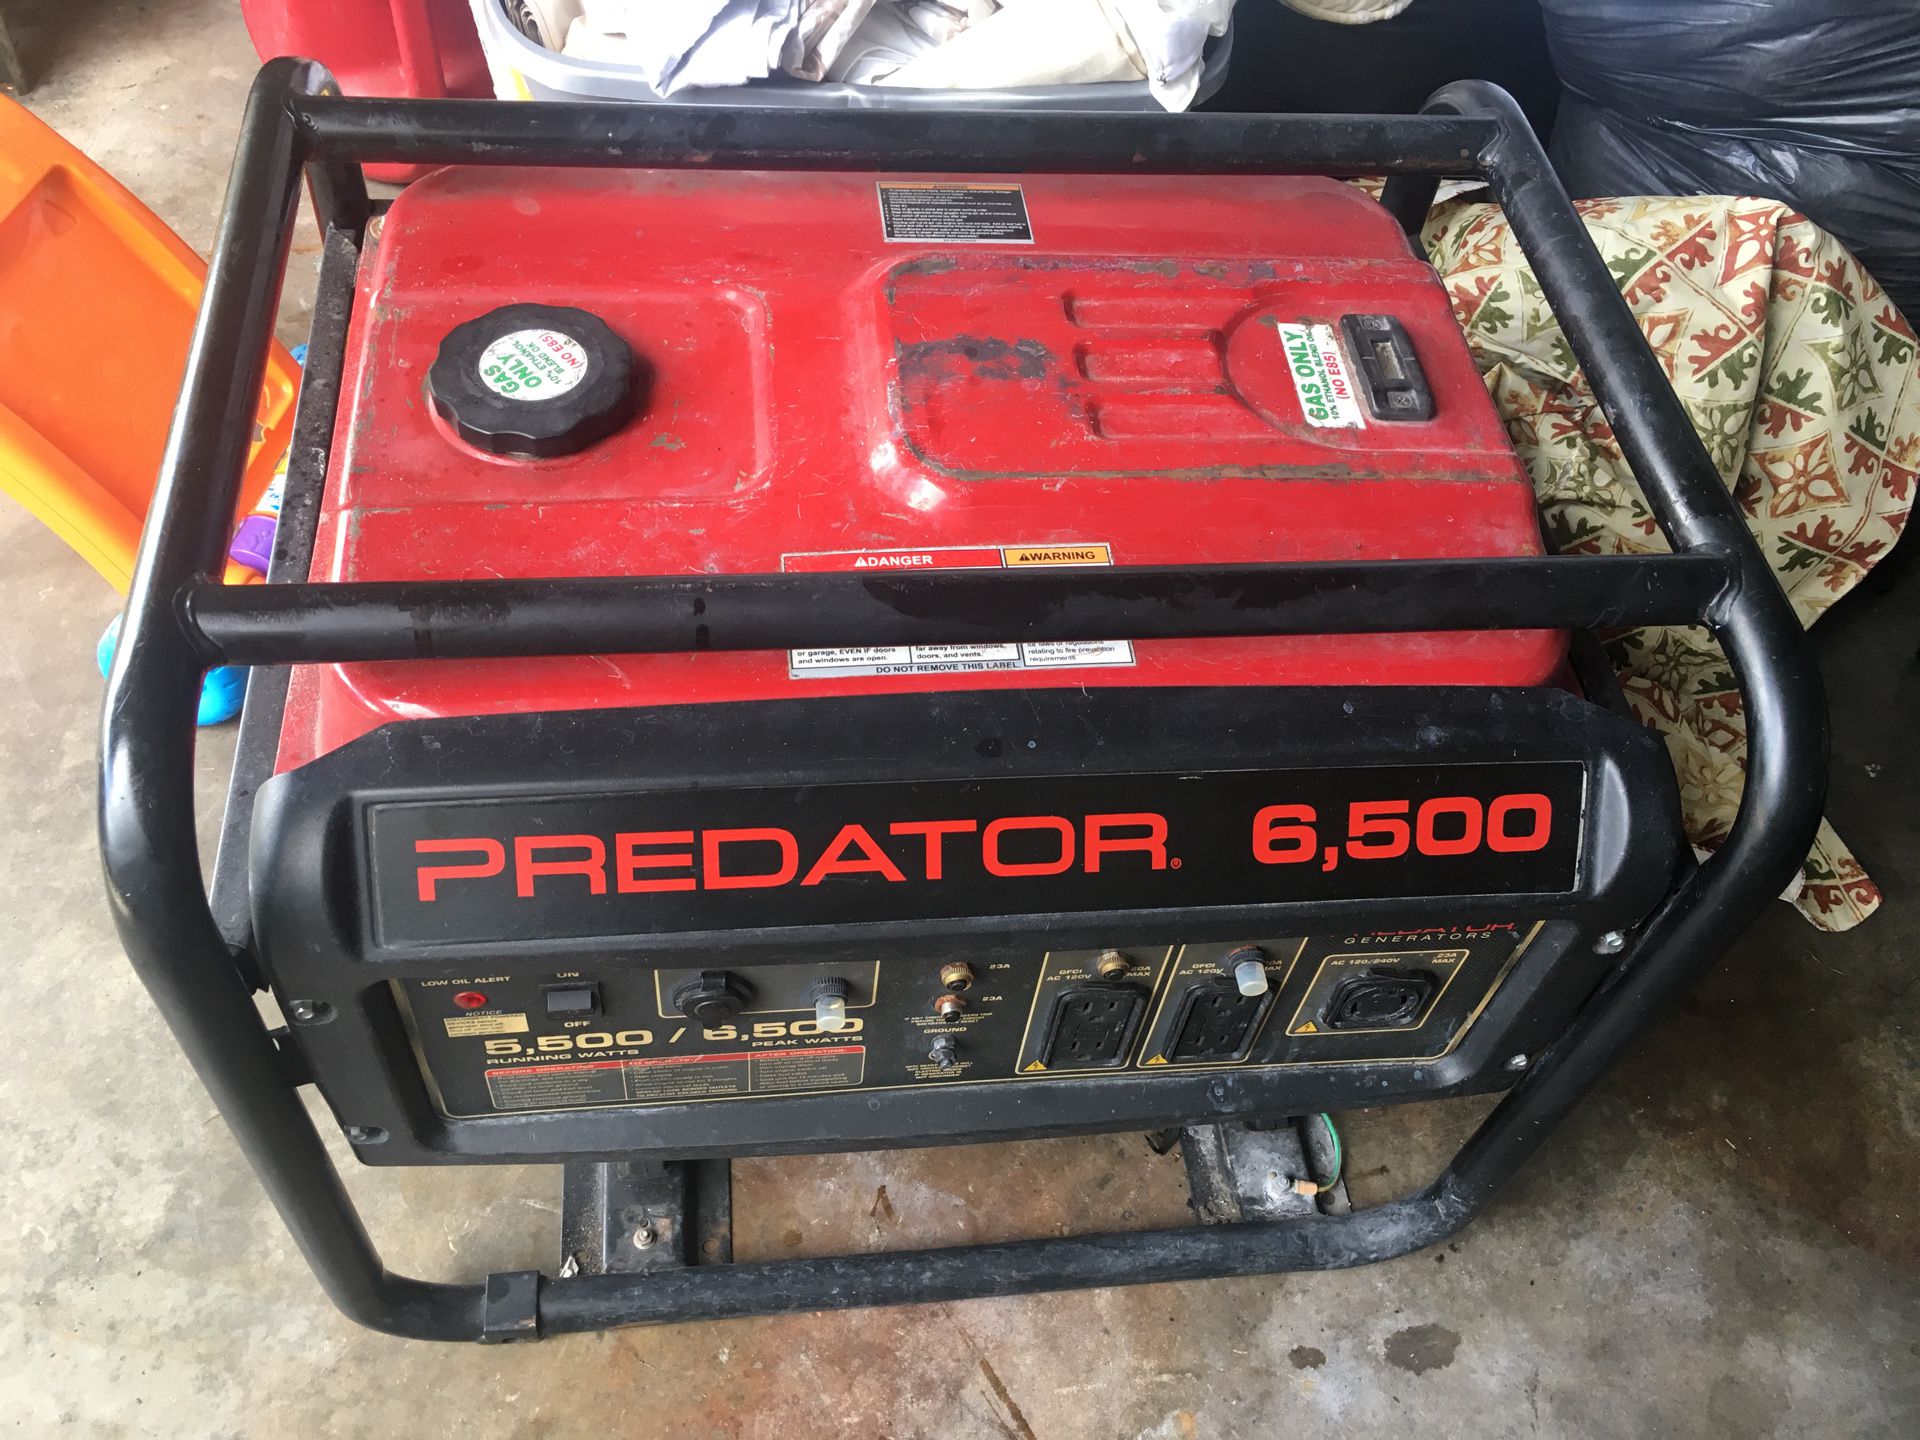 Predator generator 6,500